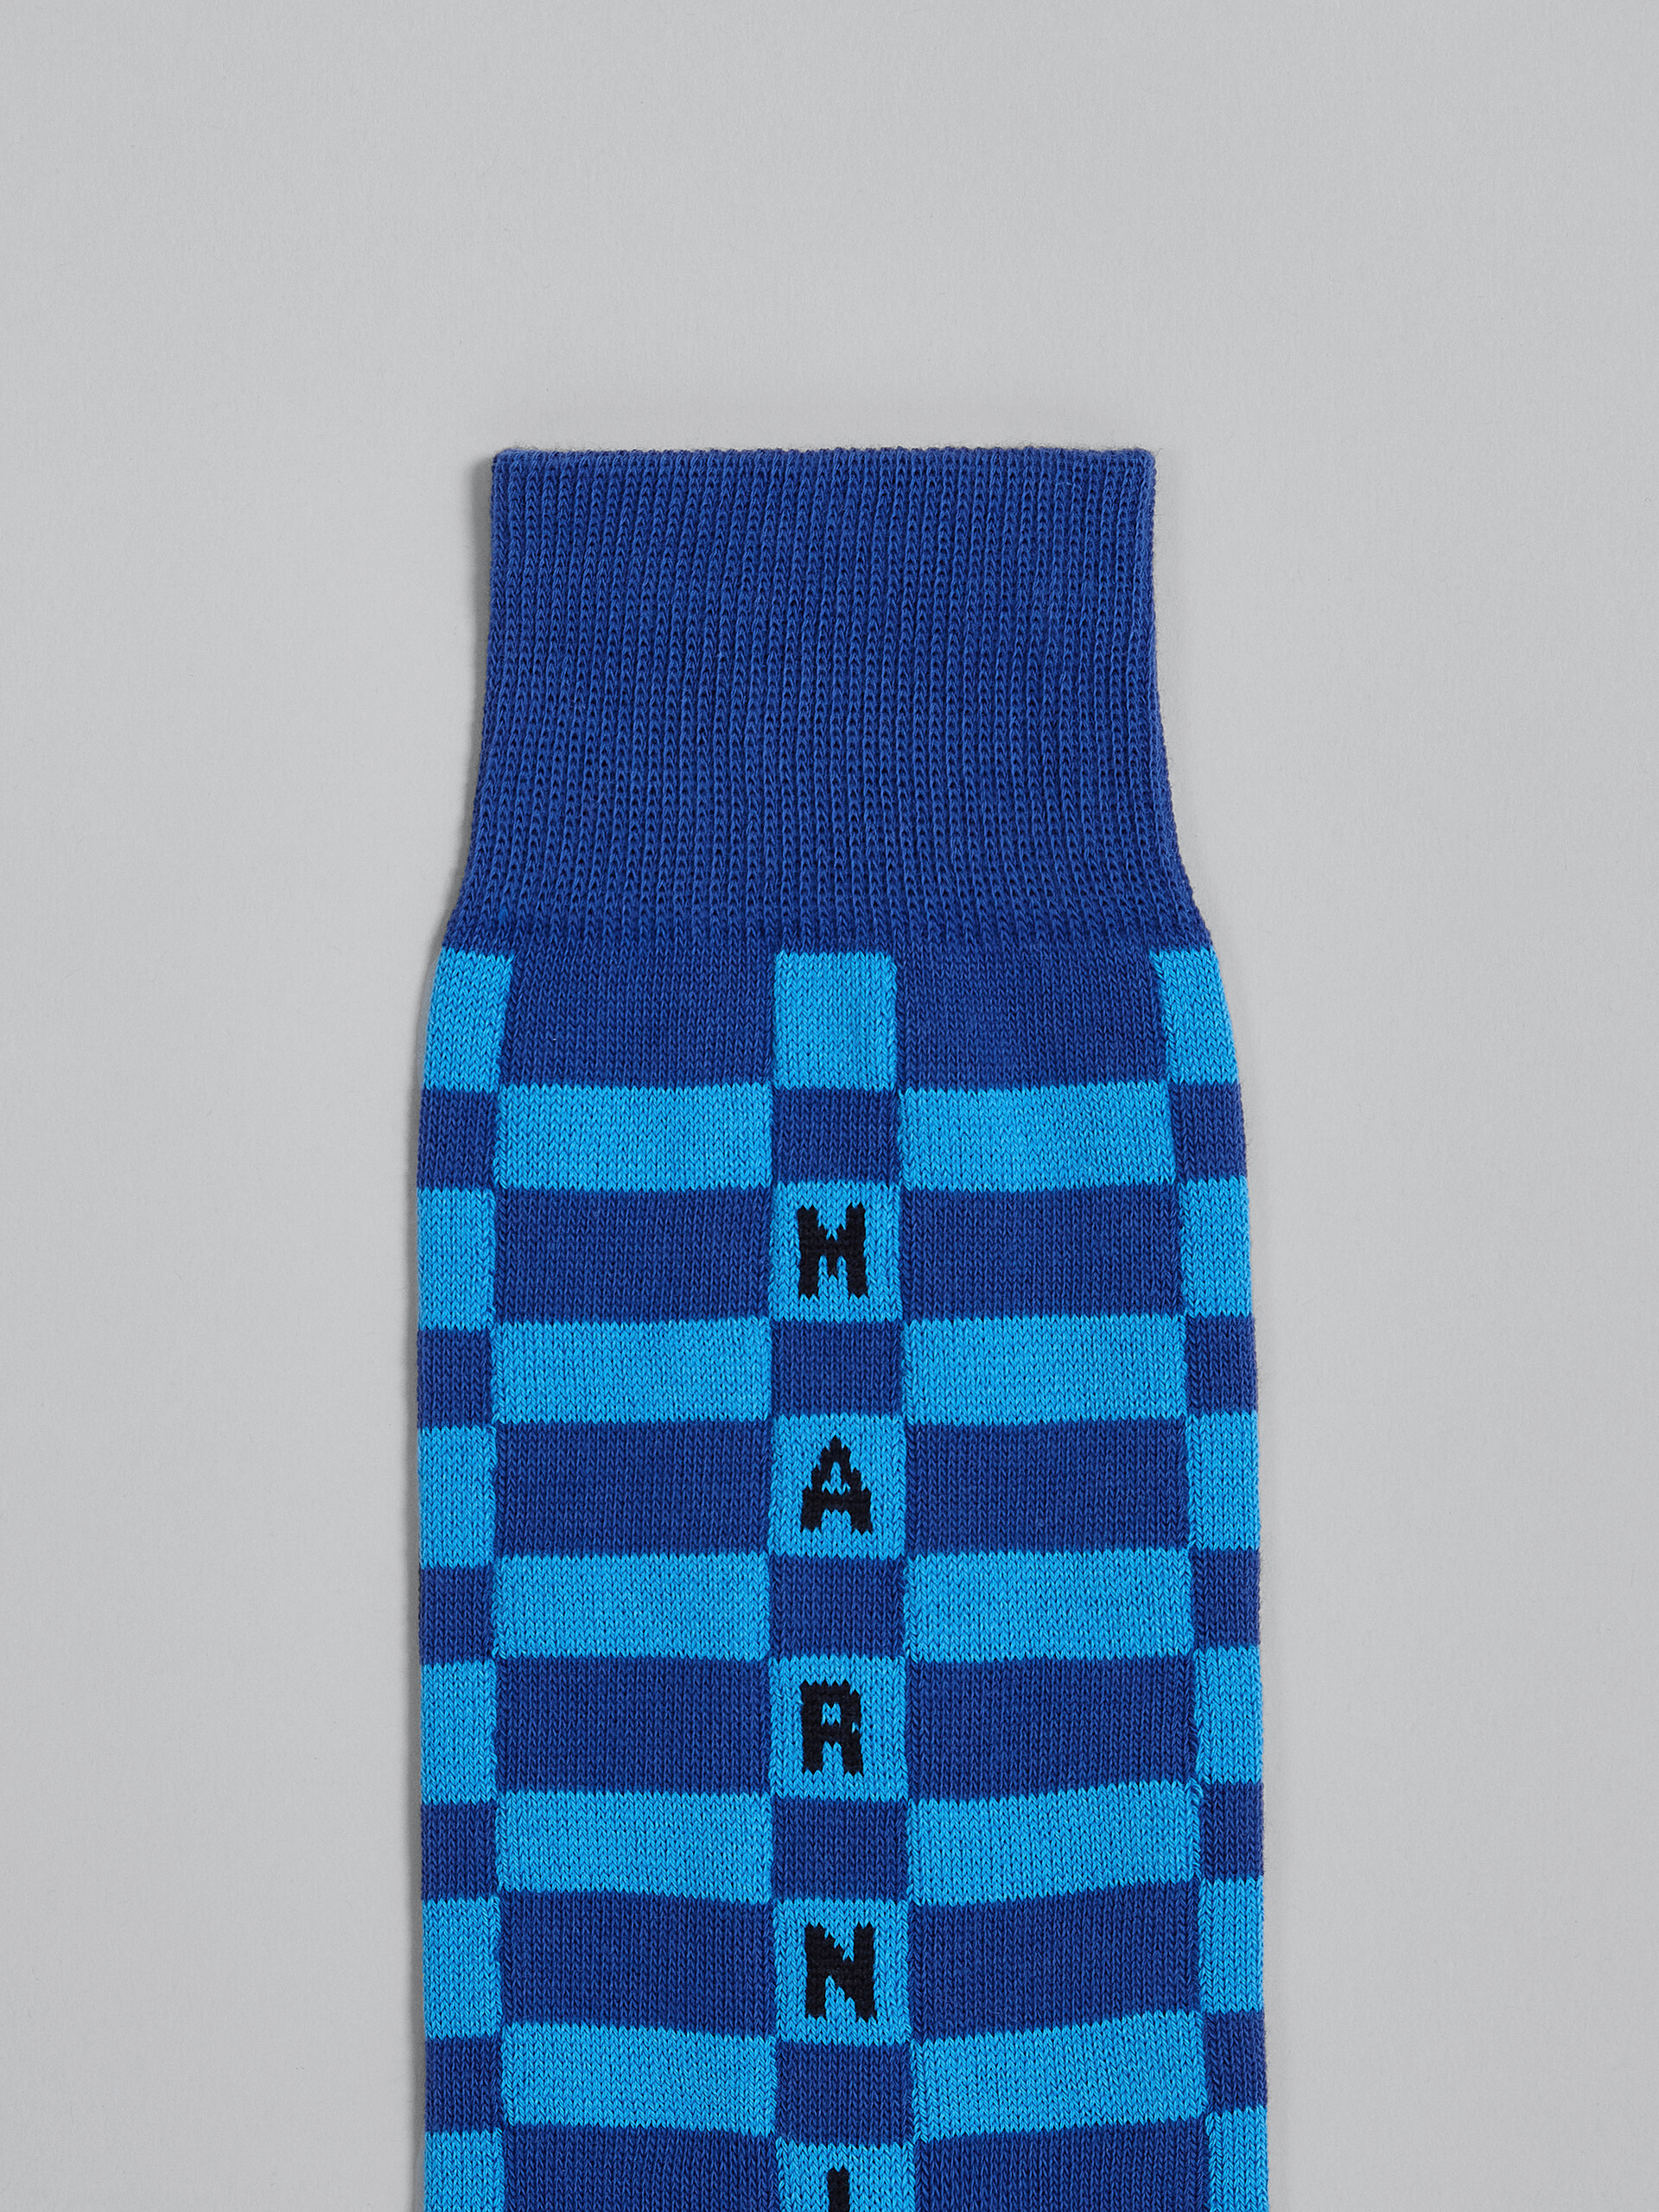 Blue cotton and nylon socks - Socks - Image 3